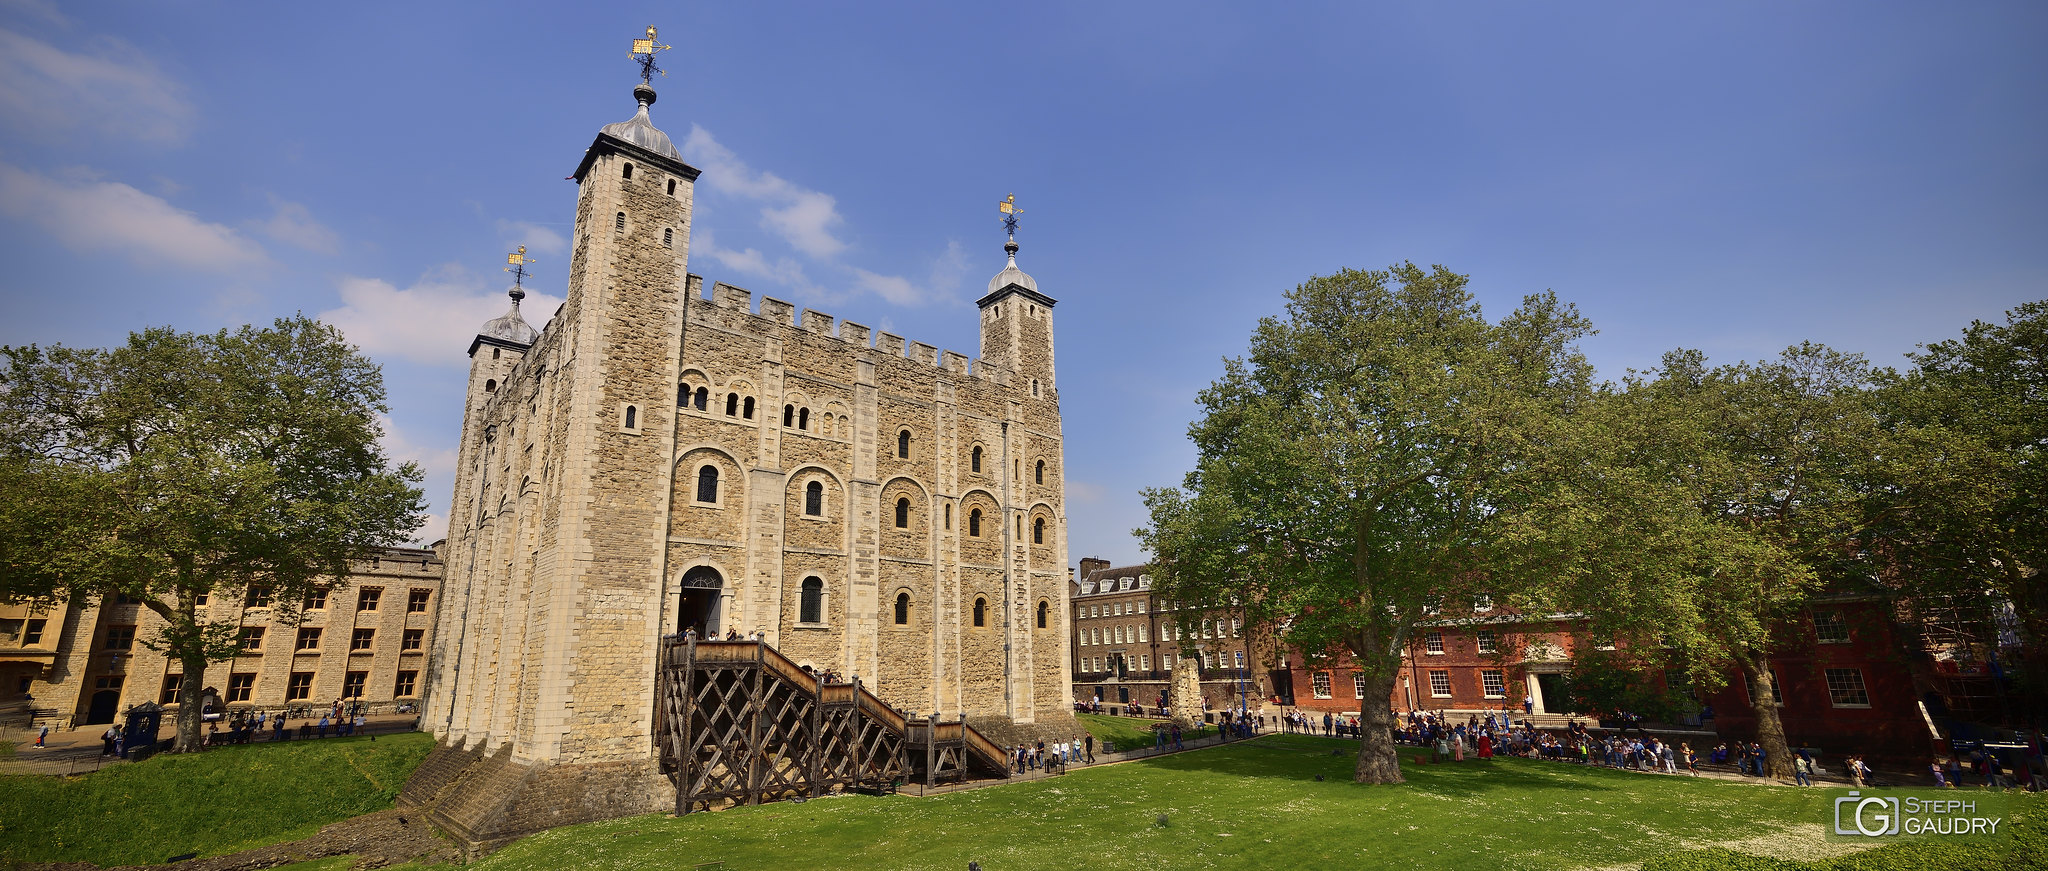 White Tower (Tower of London) [Klik om de diavoorstelling te starten]